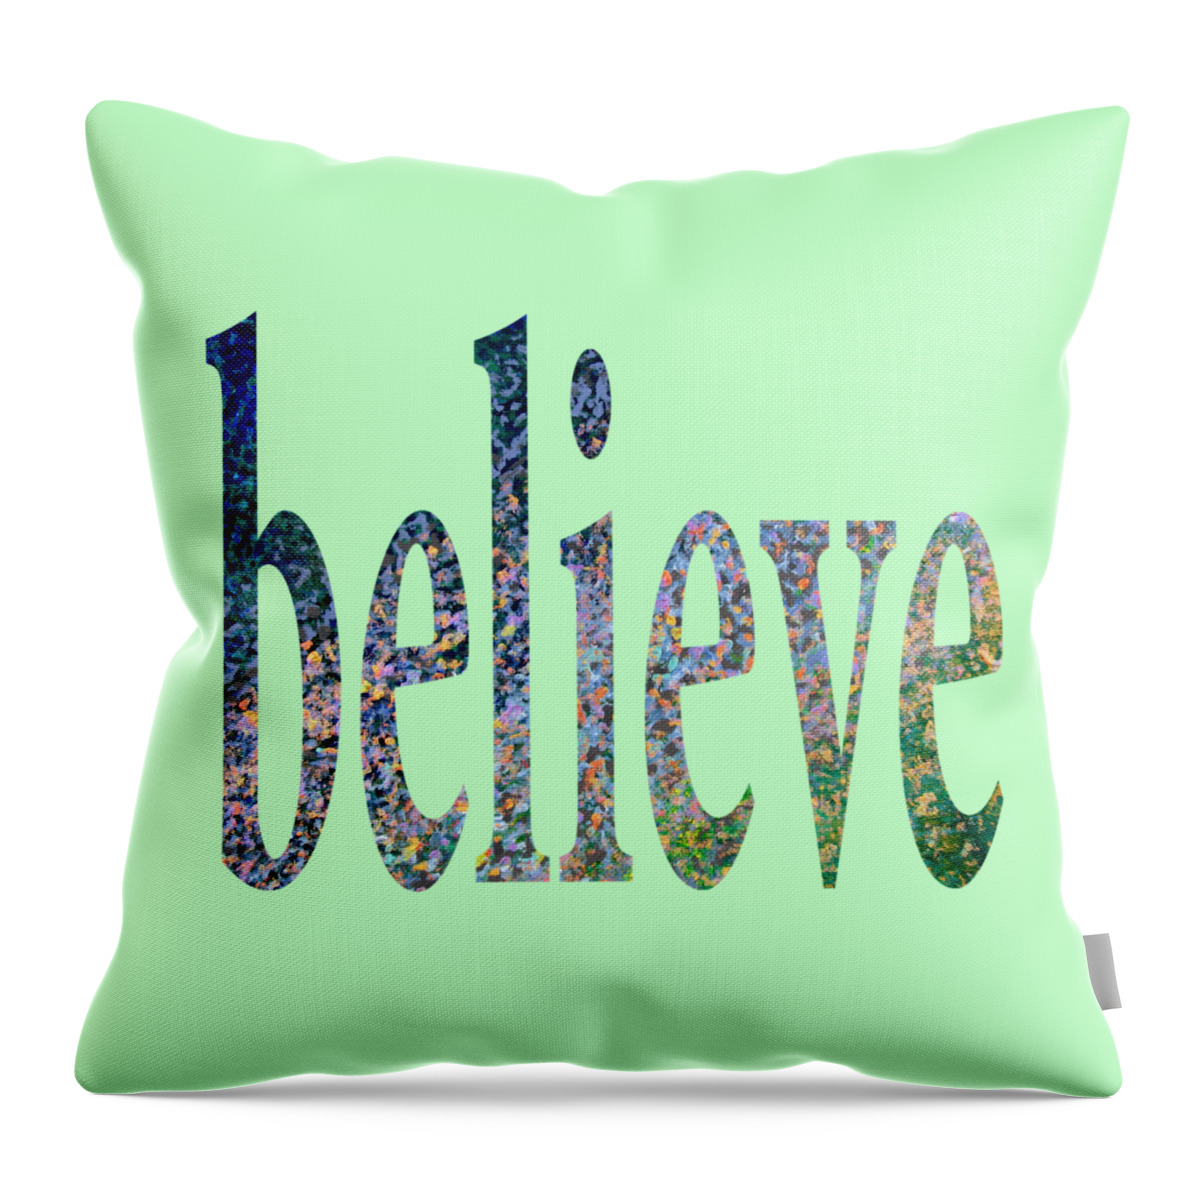 Believe Throw Pillow featuring the digital art Believe by Corinne Carroll